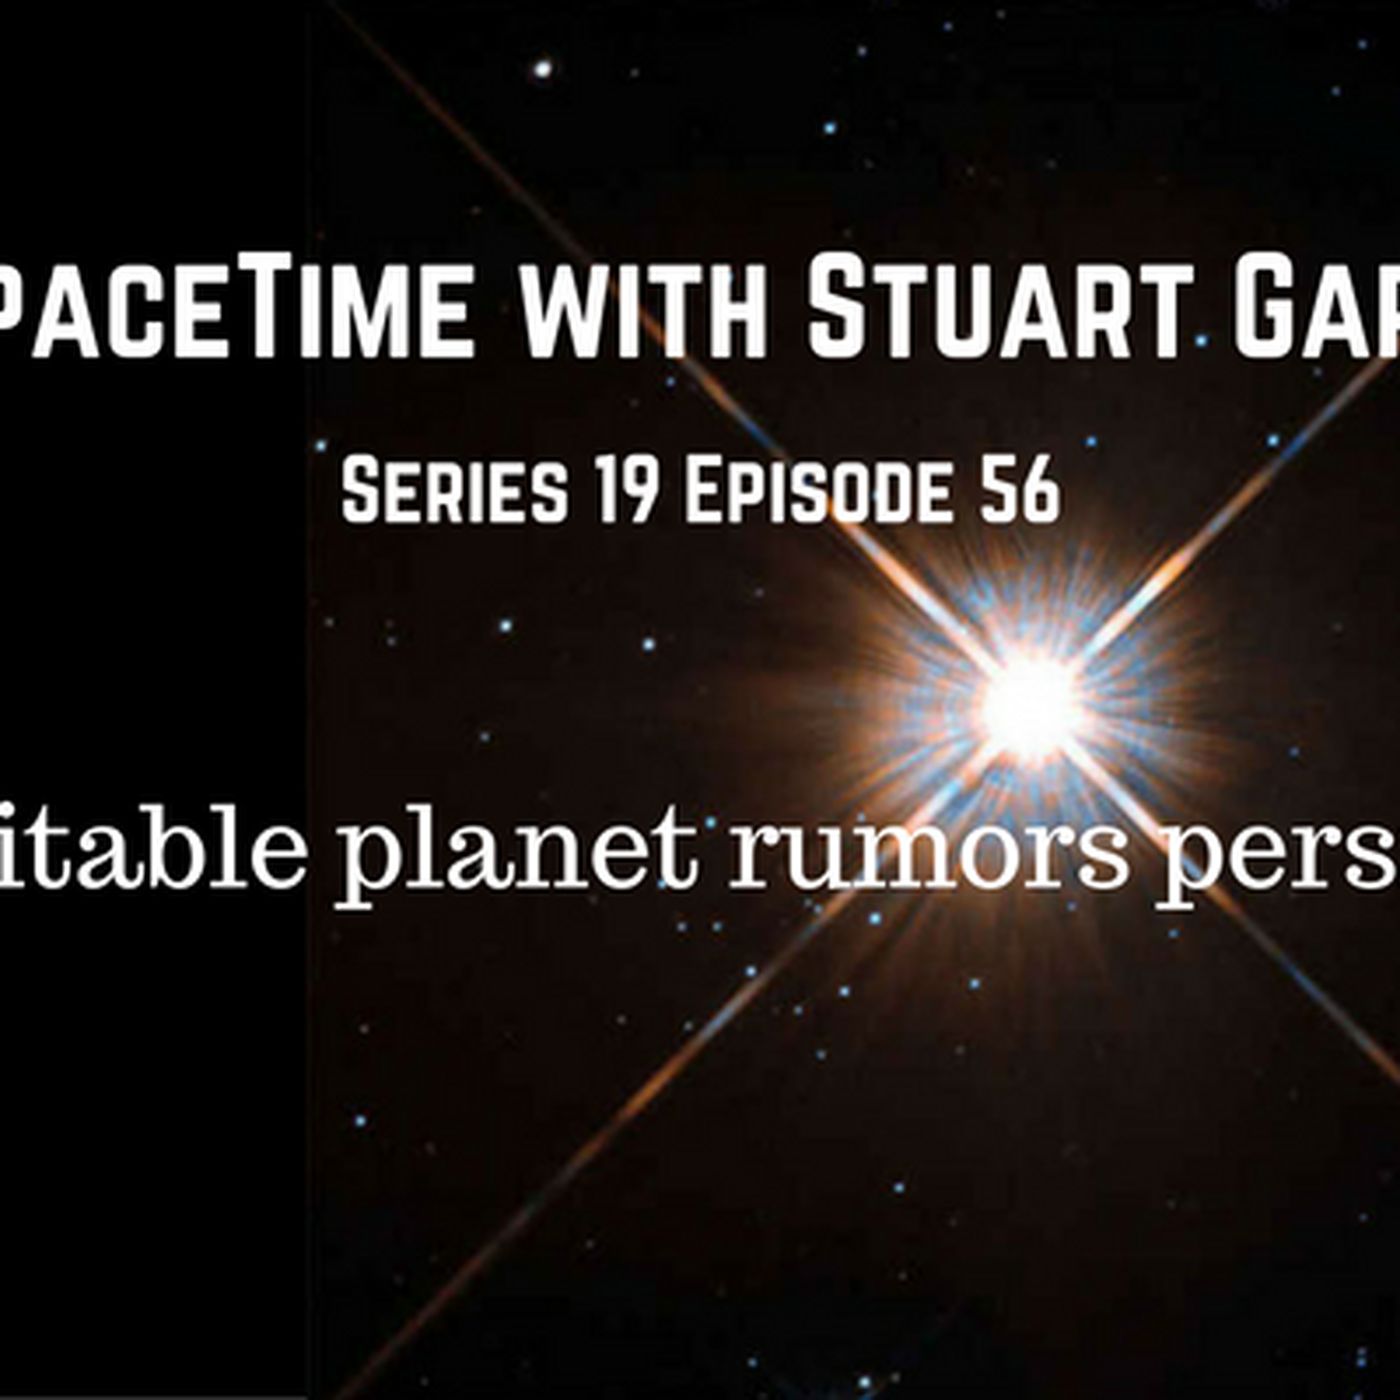 56: SpaceTime with Stuart Gary Series 19 Episode 56 - Rumors of habitable planet persist